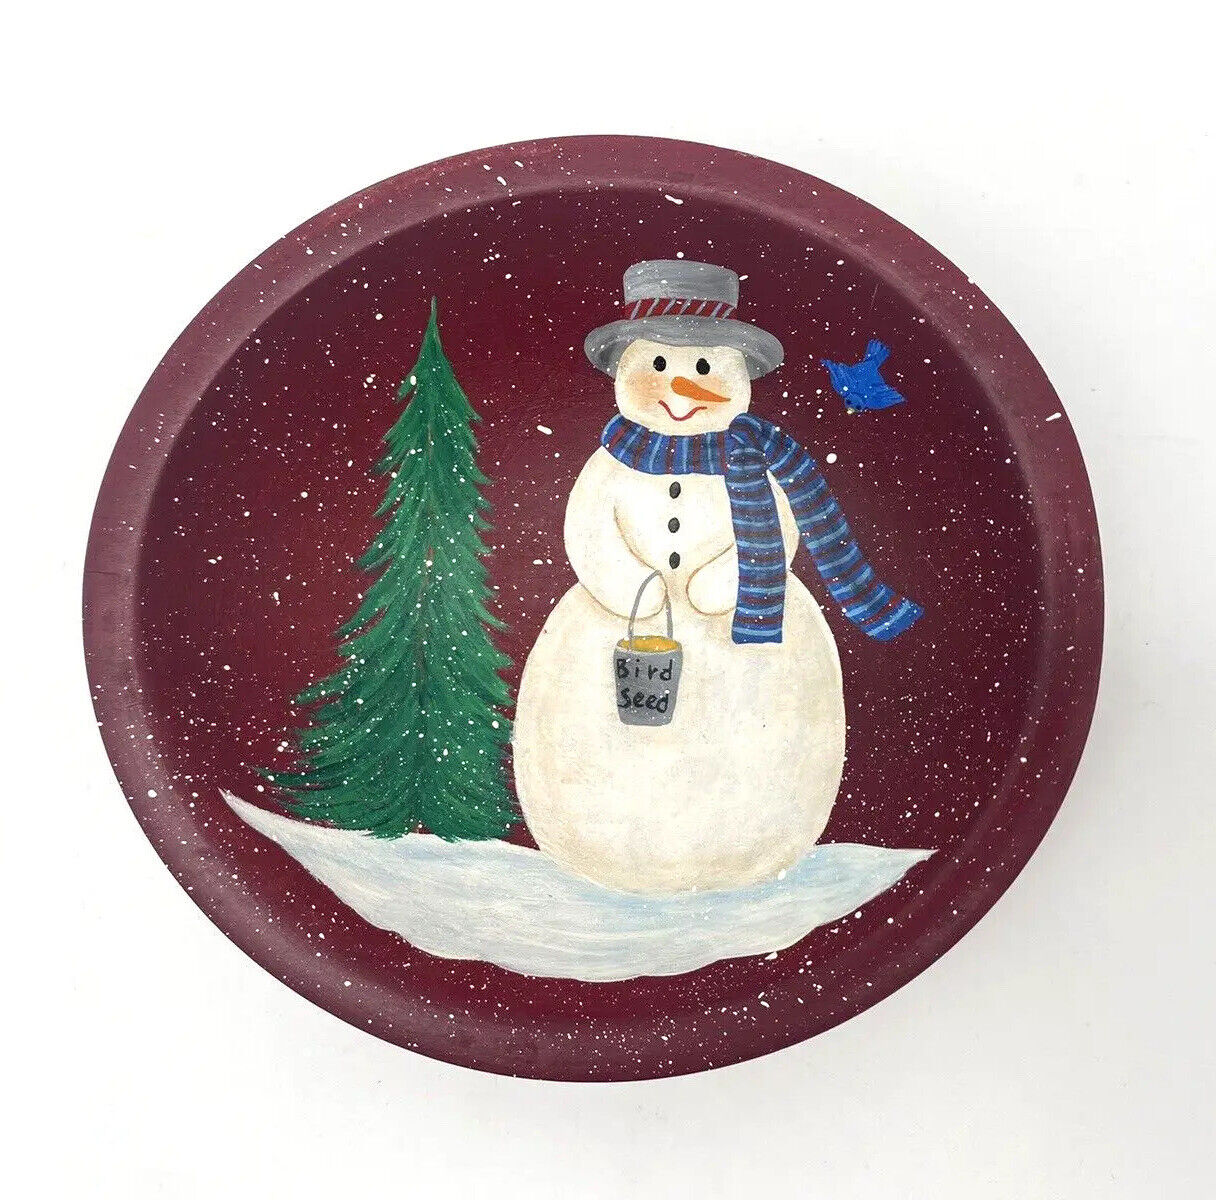 Vintage Munsing Bowl Red Bowl Hand Painted Snowman Theme Decorative Edge